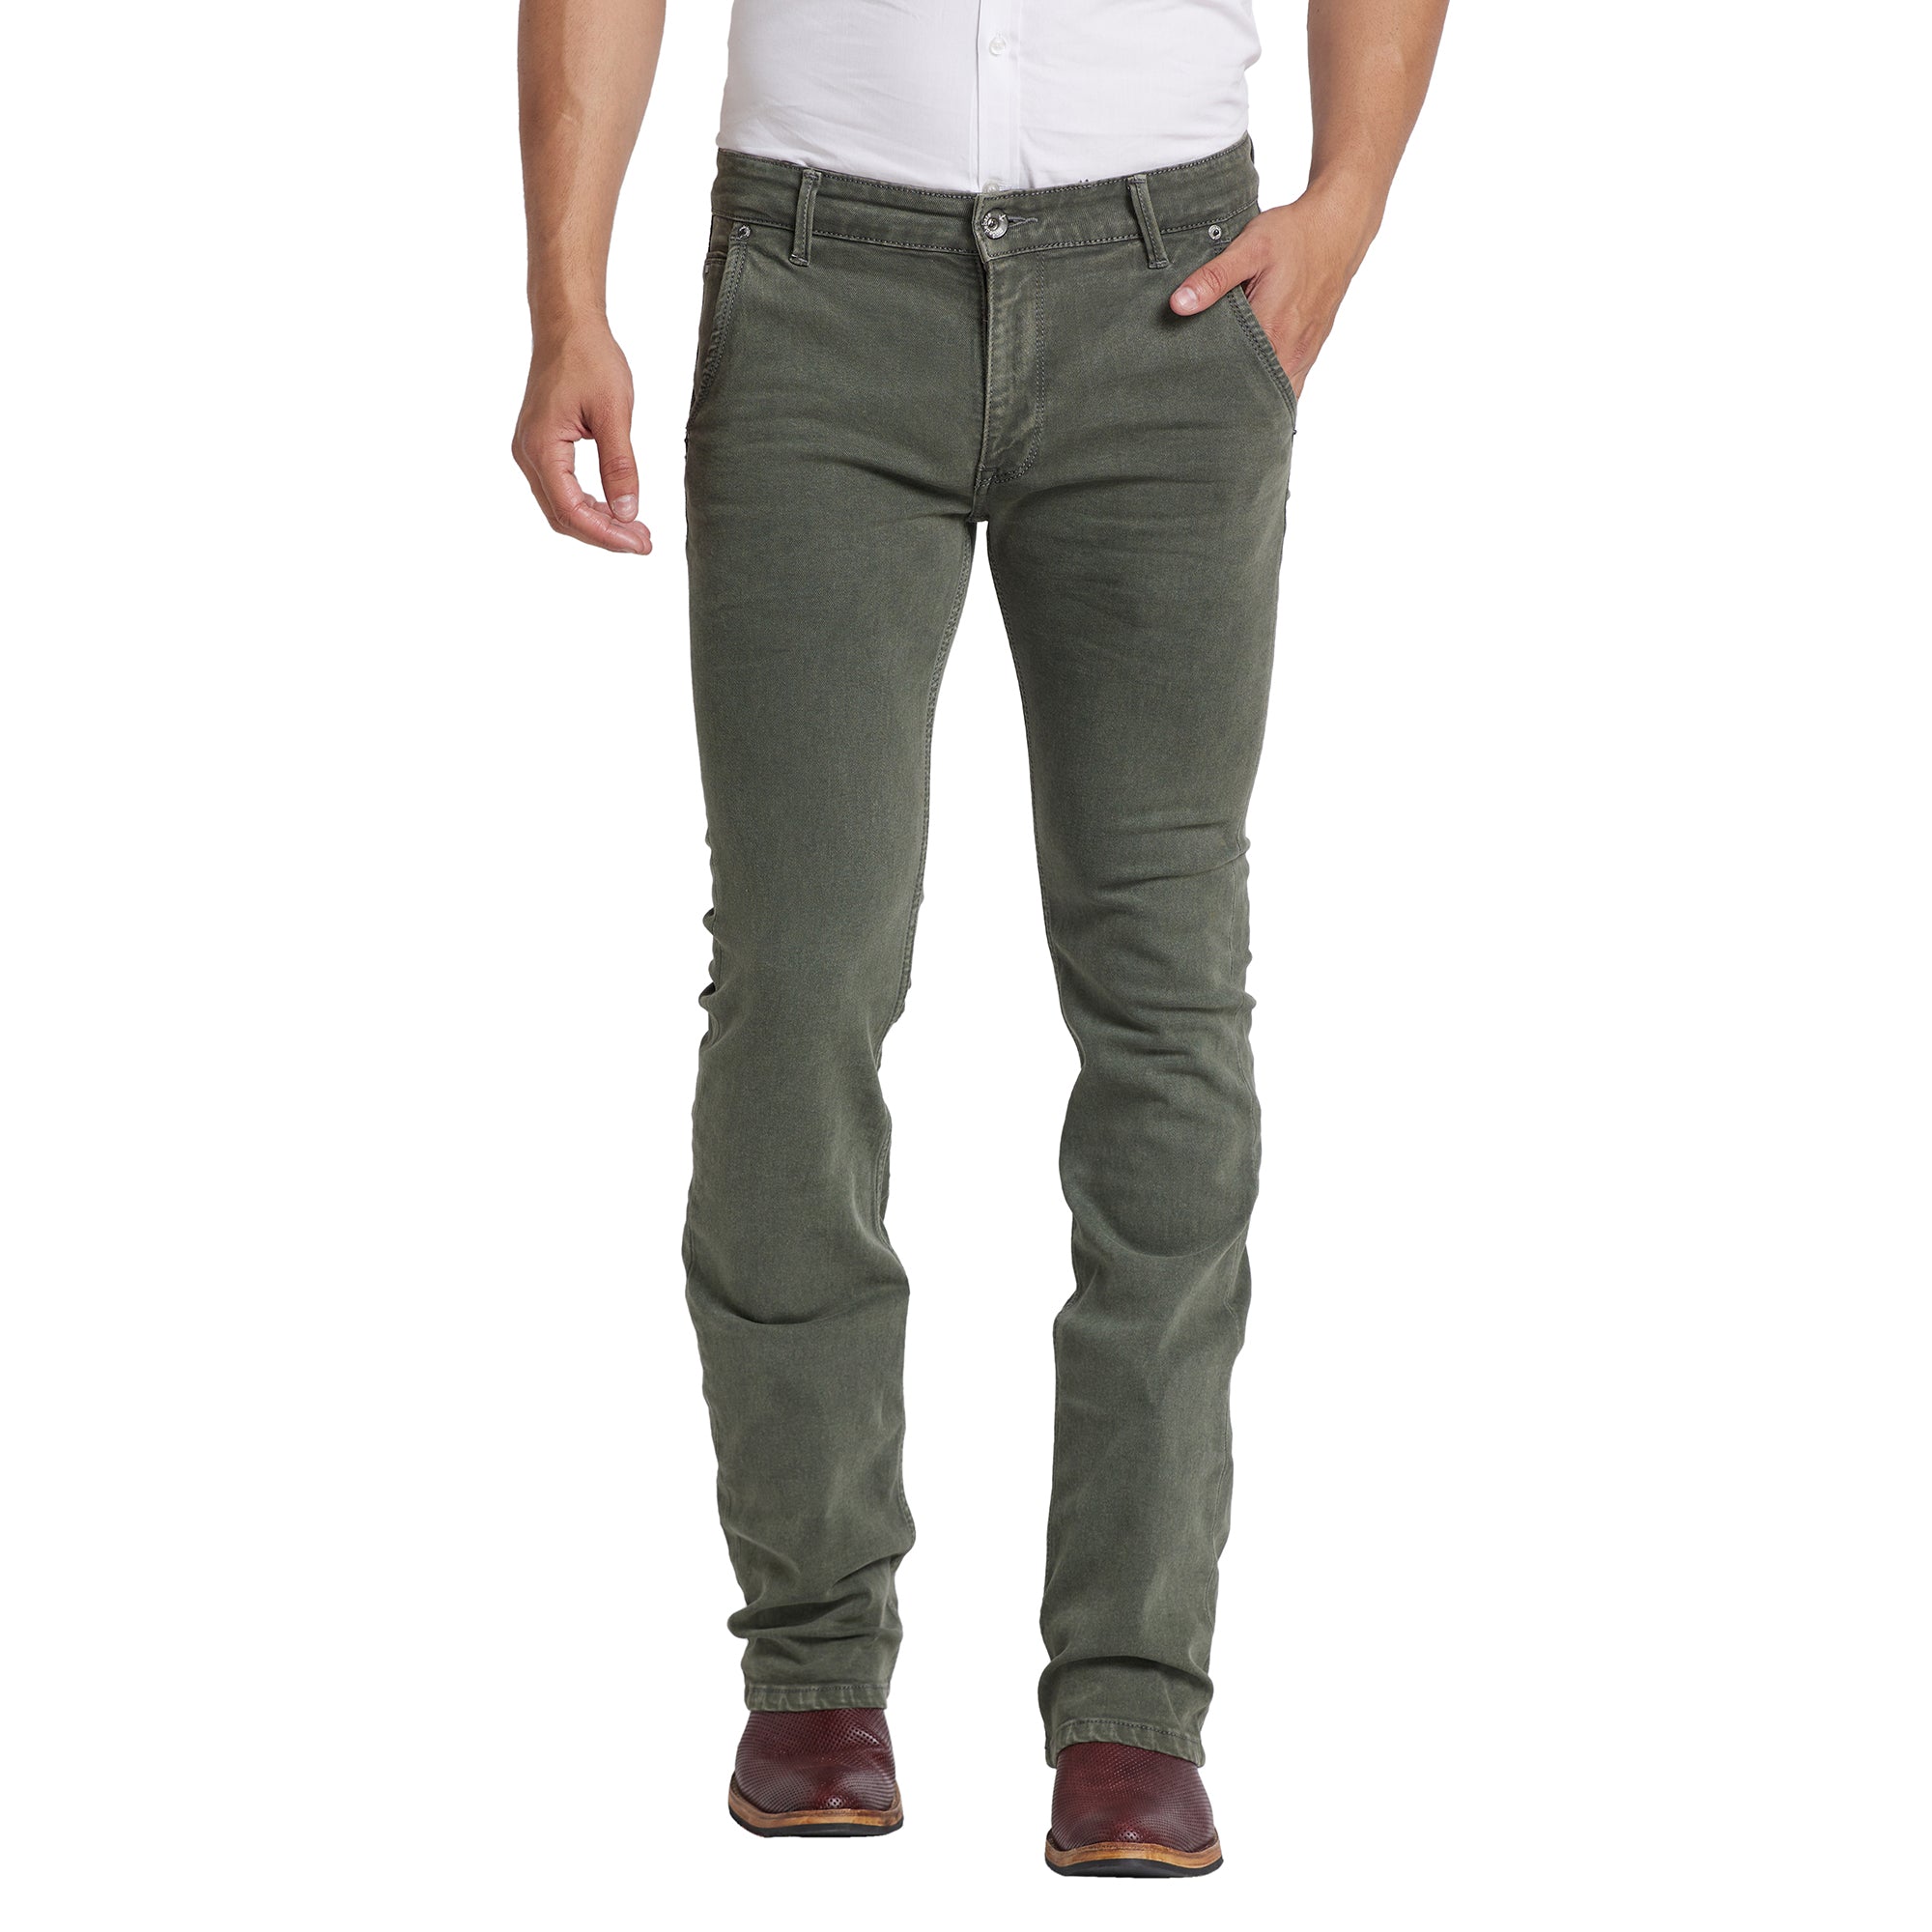 Men's Green Slim Fit Jeans